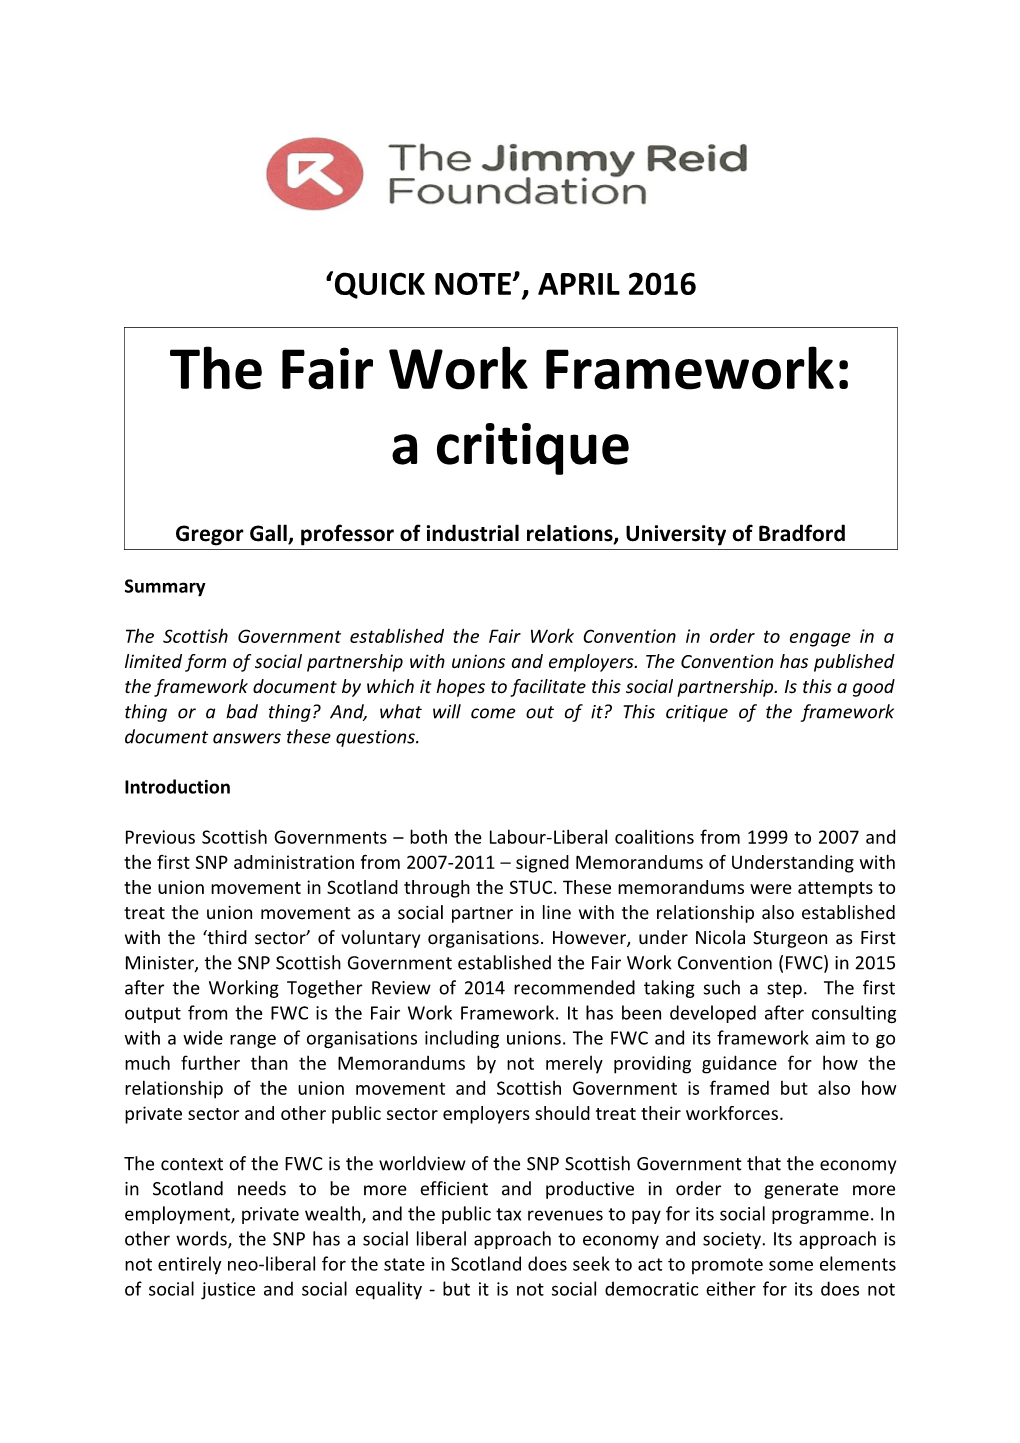 The Fair Work Framework